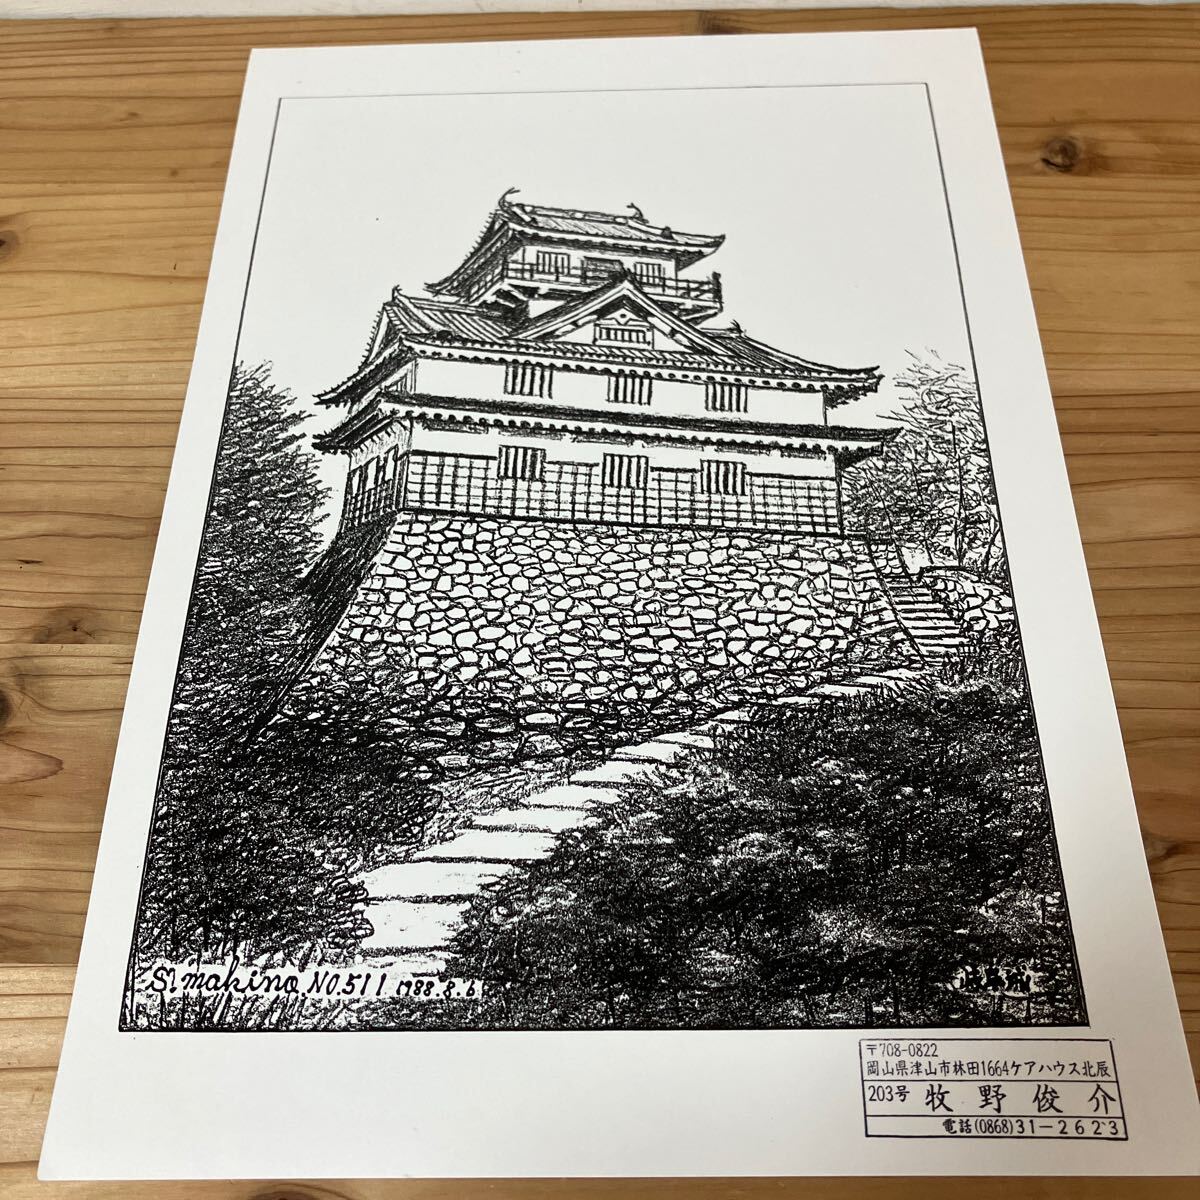 Mao H0305 [Makino Shunsuke Gifu Castle No. 511 Impression d'un dessin au crayon] 1988, Ouvrages d'art, Peinture, Dessin au crayon, Dessin au charbon de bois